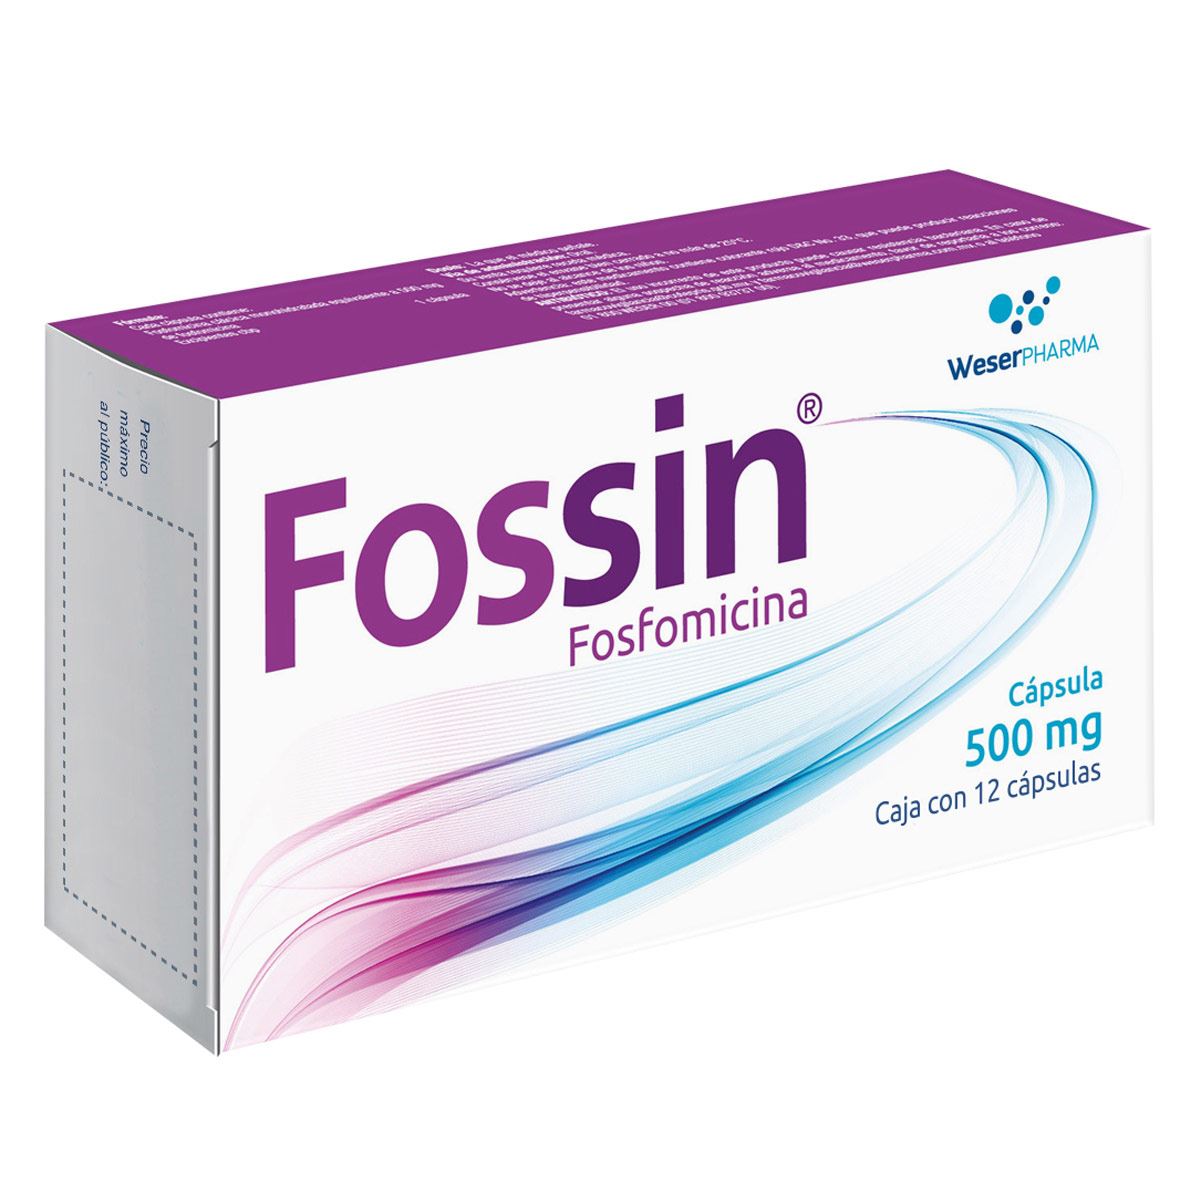 Fossin 500 Mg. Caja con 12 Cápsulas